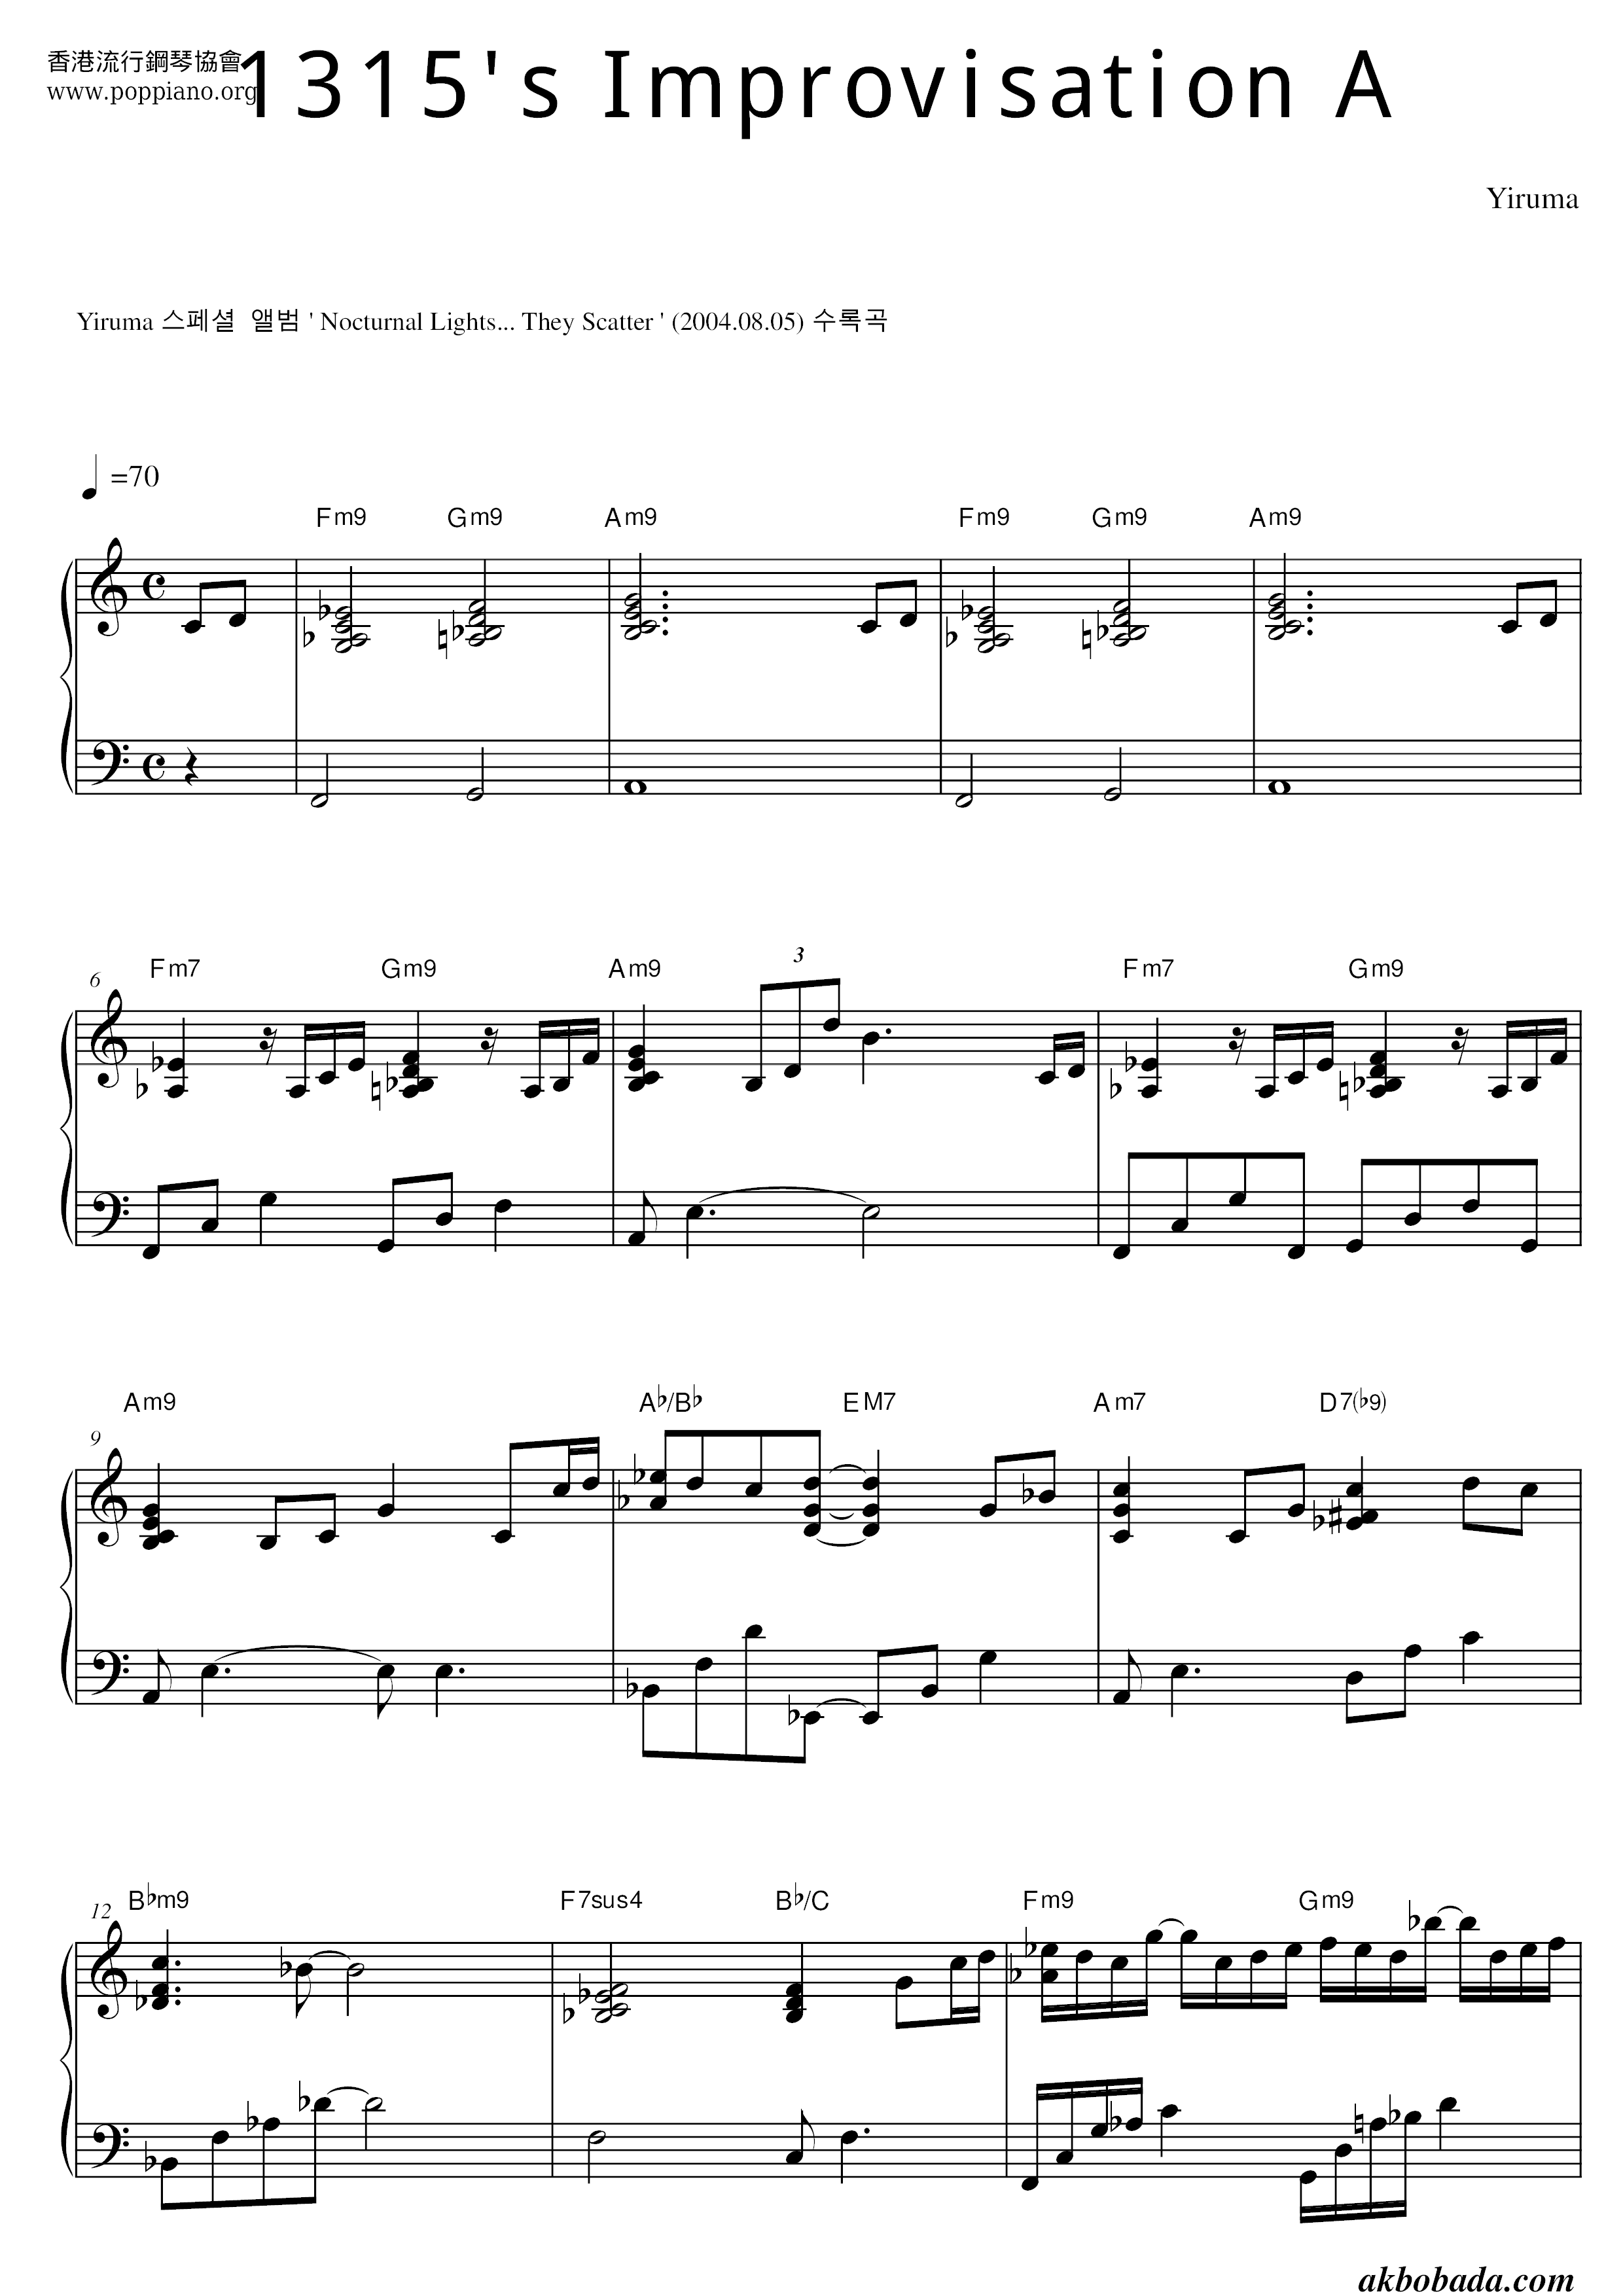 1315's Improvisation A琴譜